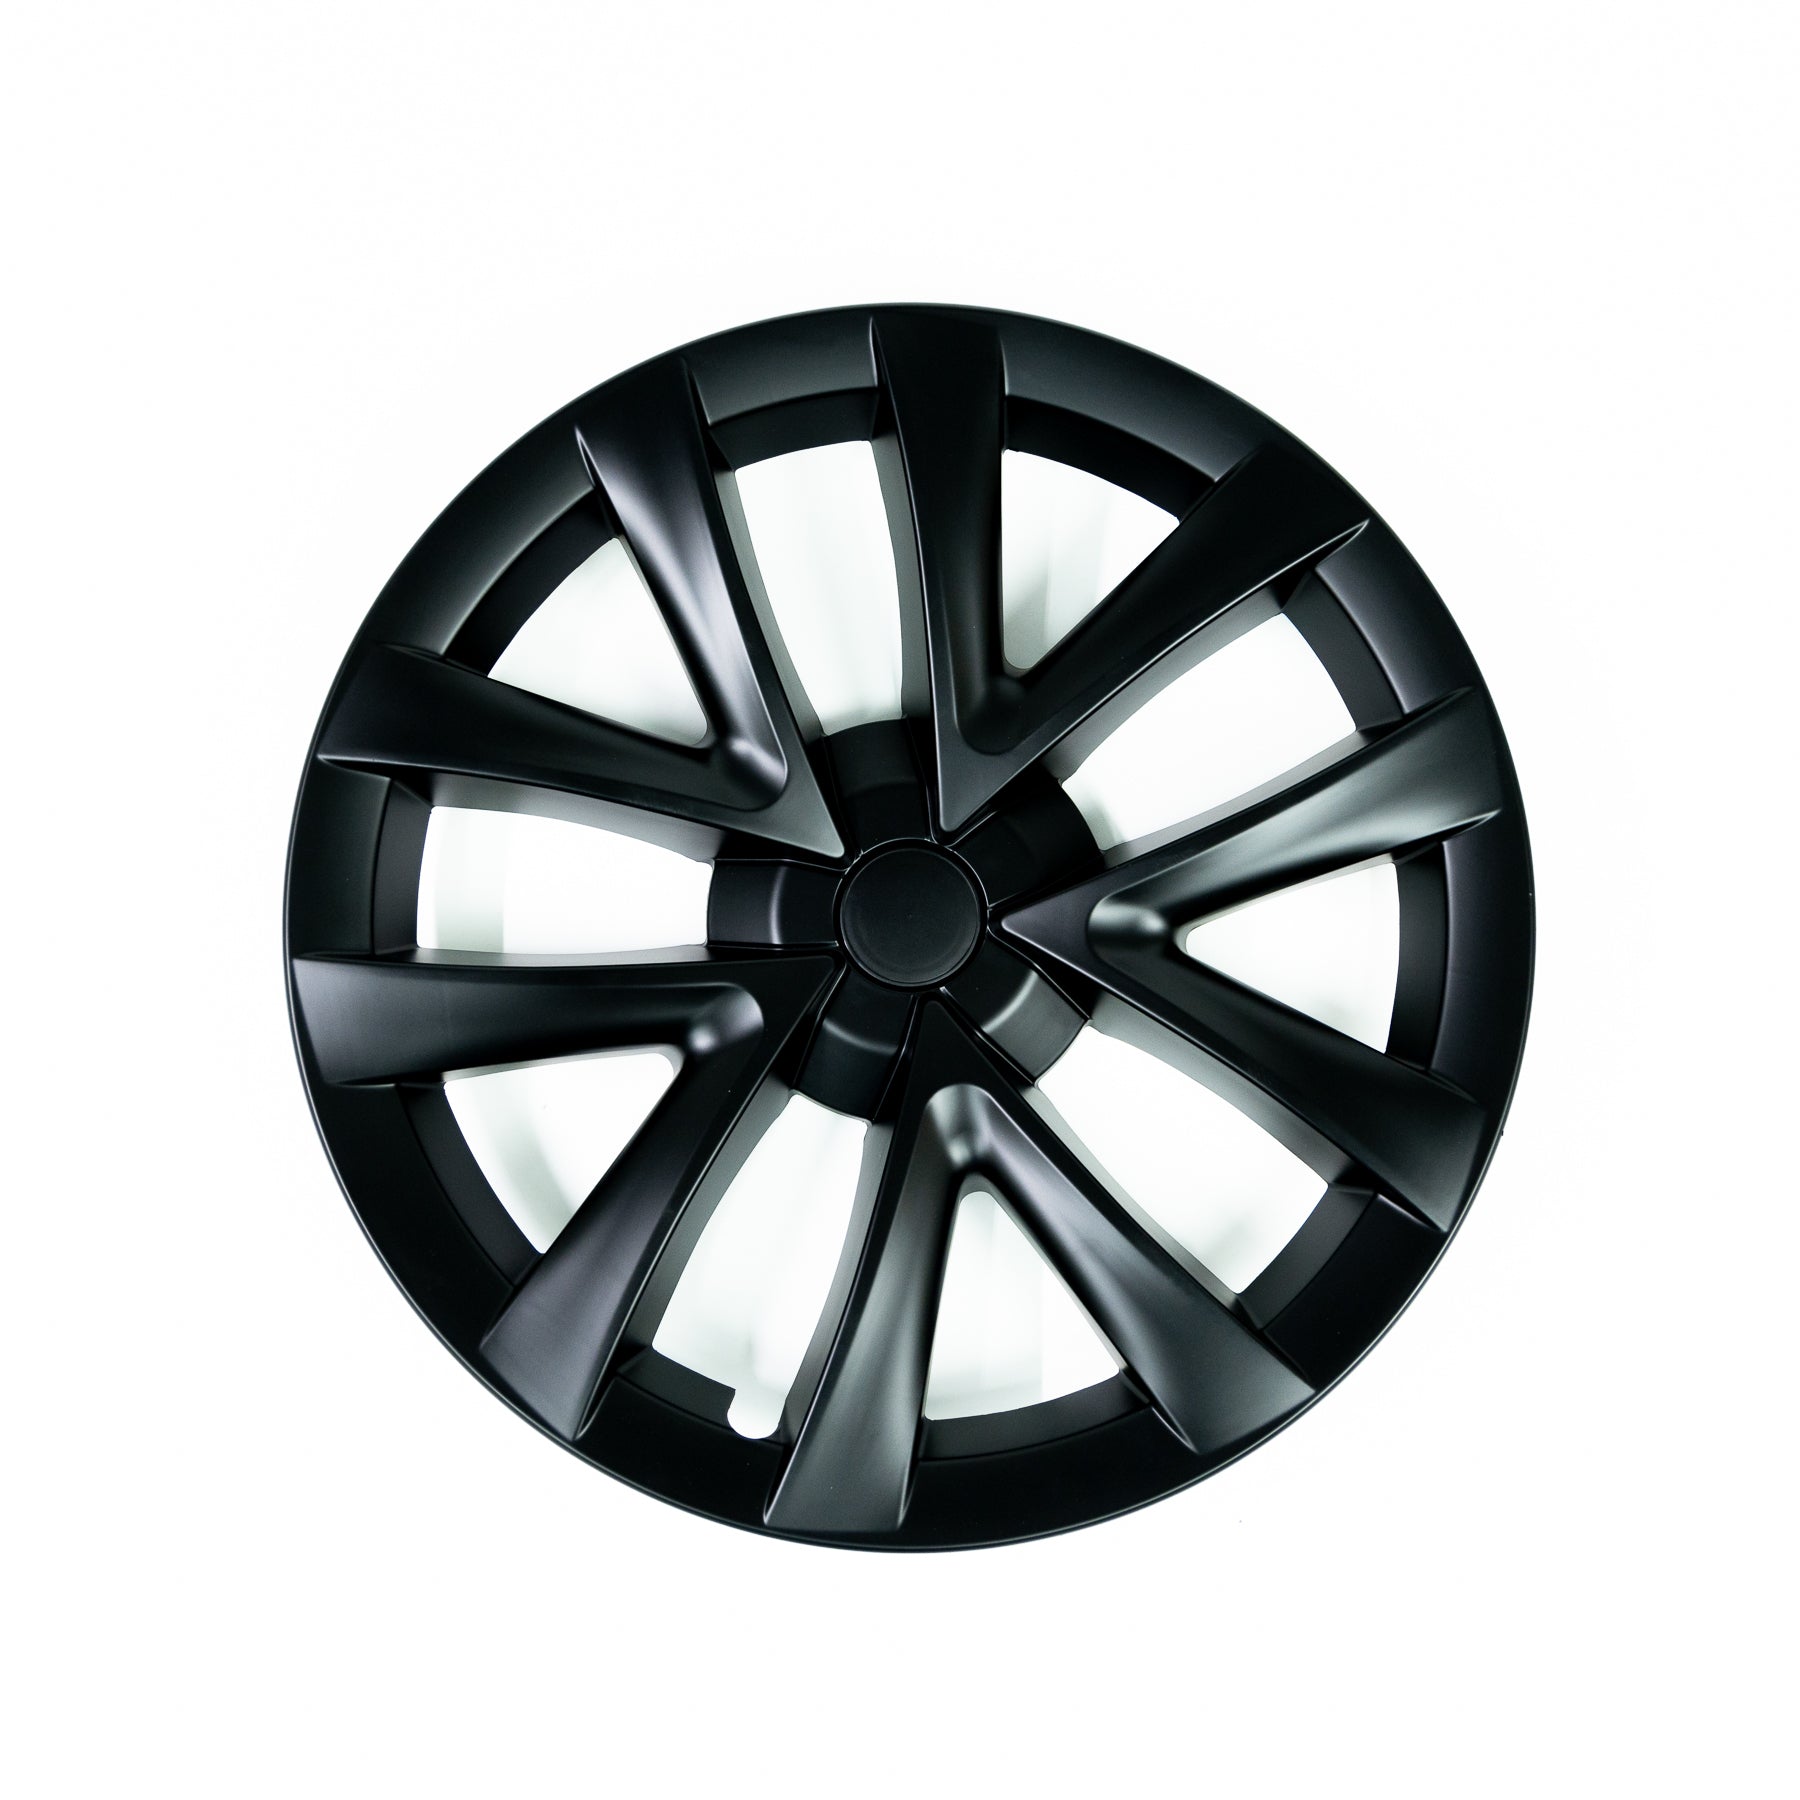 18" Plaid-Style Wheel Covers for Tesla Model 3  - Eevify